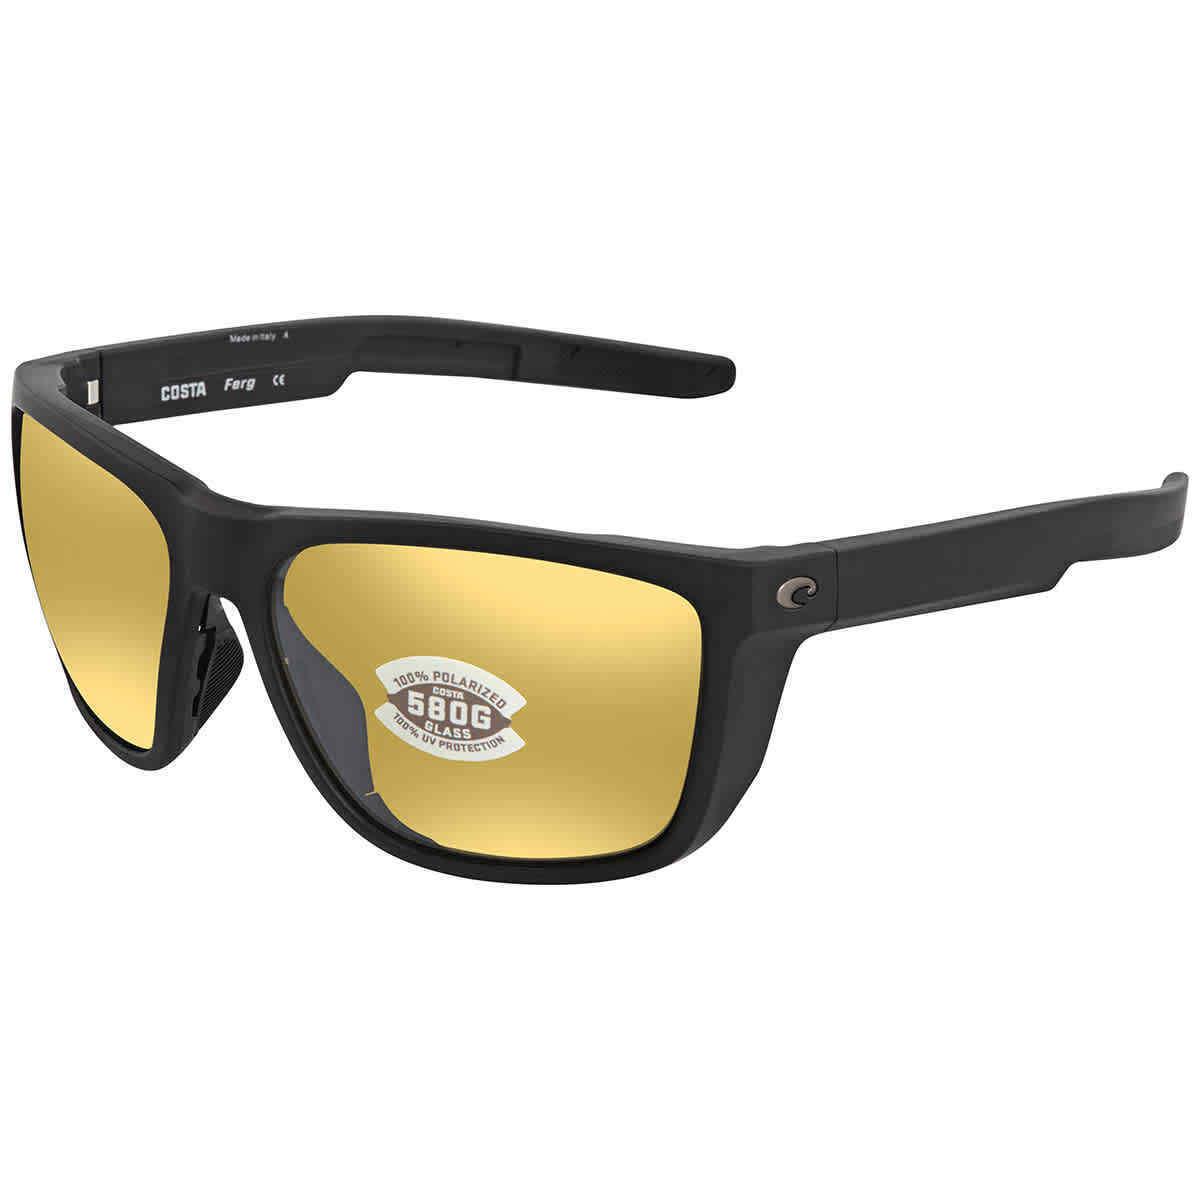 Costa Del Mar Ferg Sunrise Silver Mirror Polarized Glass Men`s Sunglasses Frg 11 - Frame: Black, Lens: Yellow